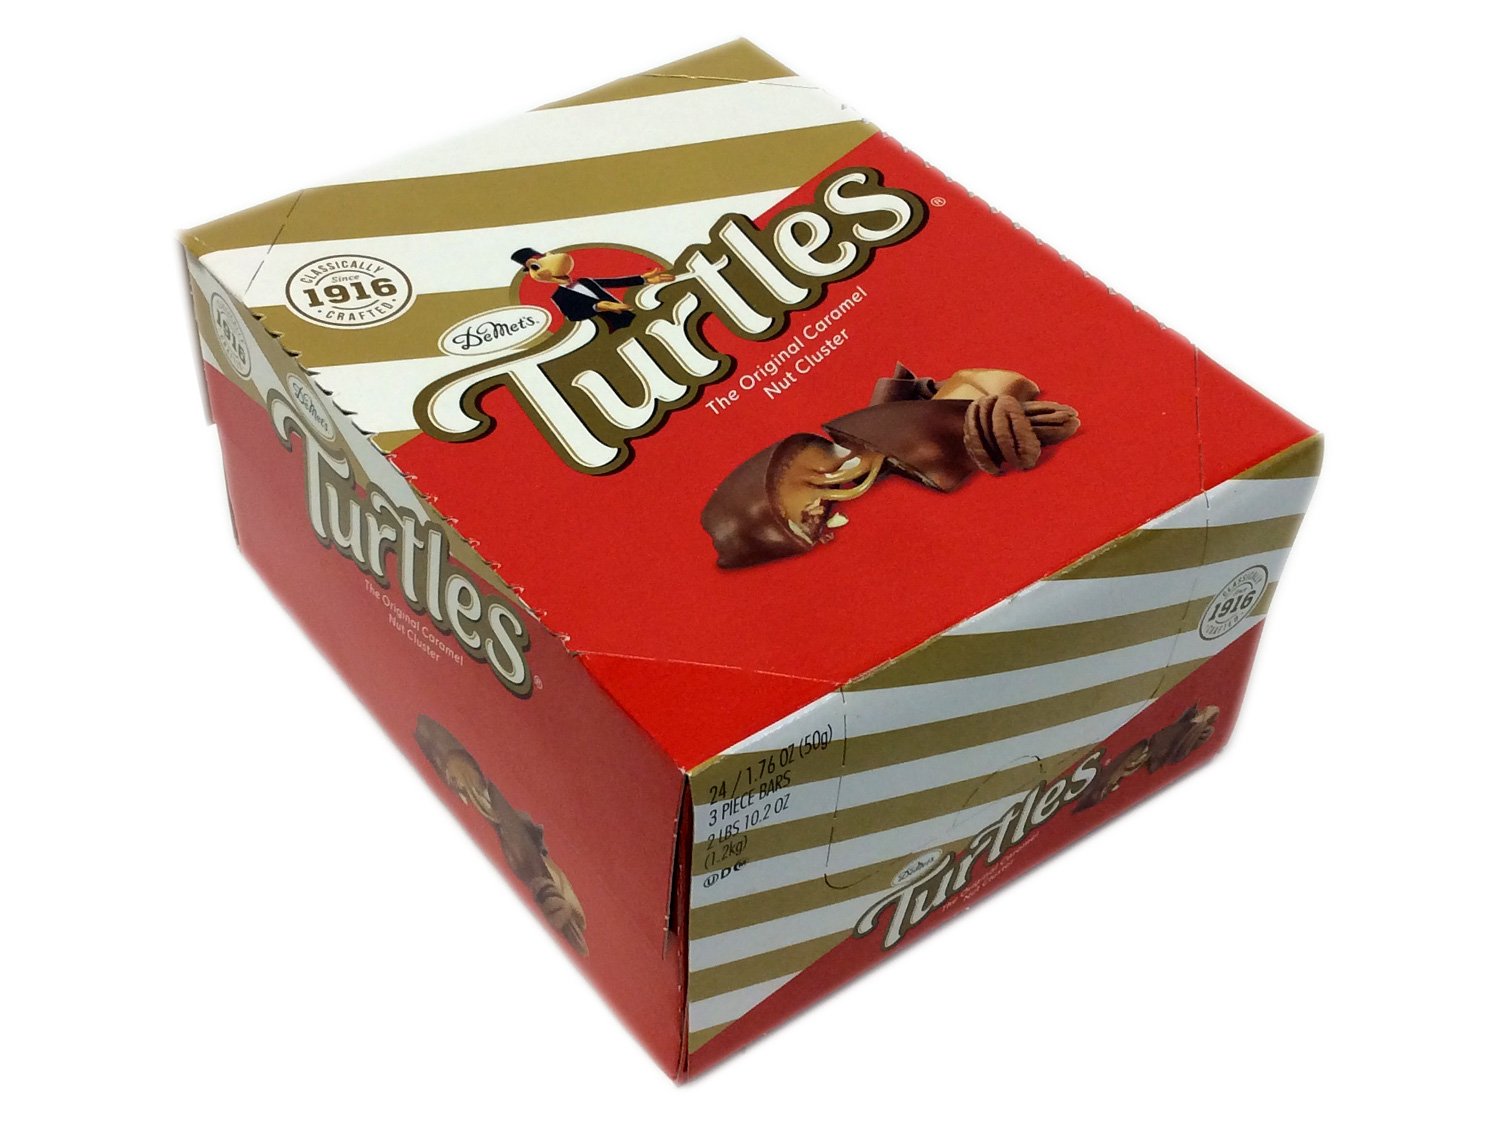 Turtles Original by DeMet's - 1.76 oz 3-piece bar - box of 24